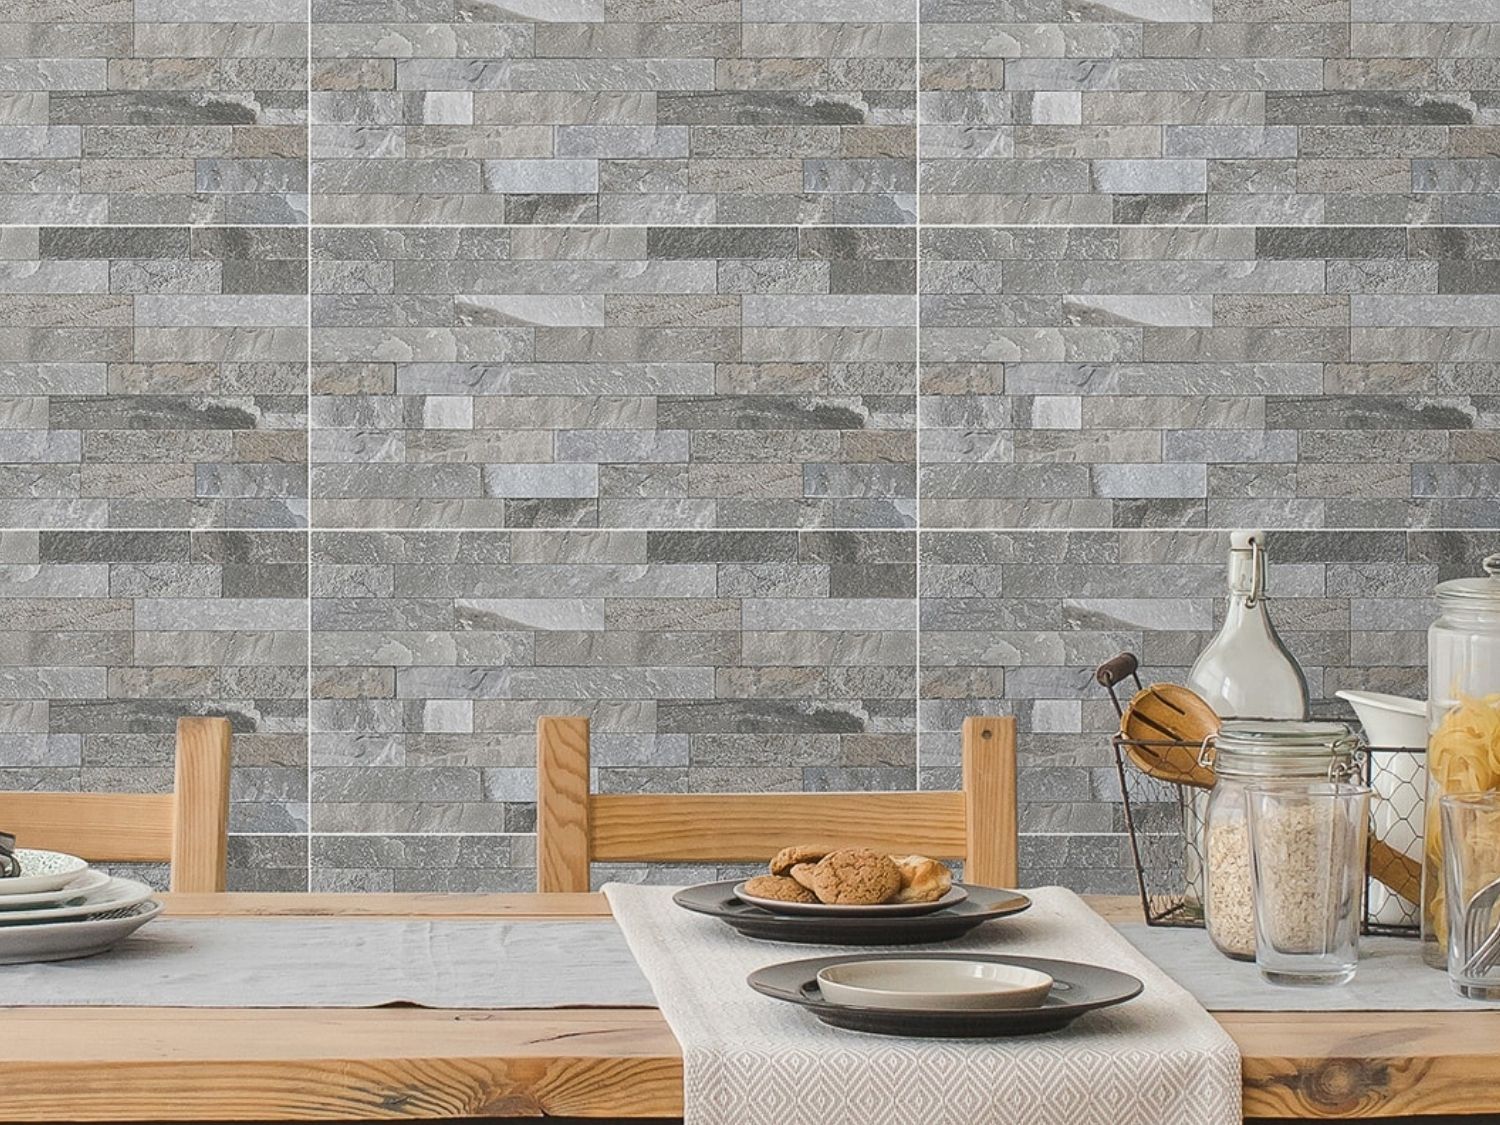 ctm kitchen wall tiles price